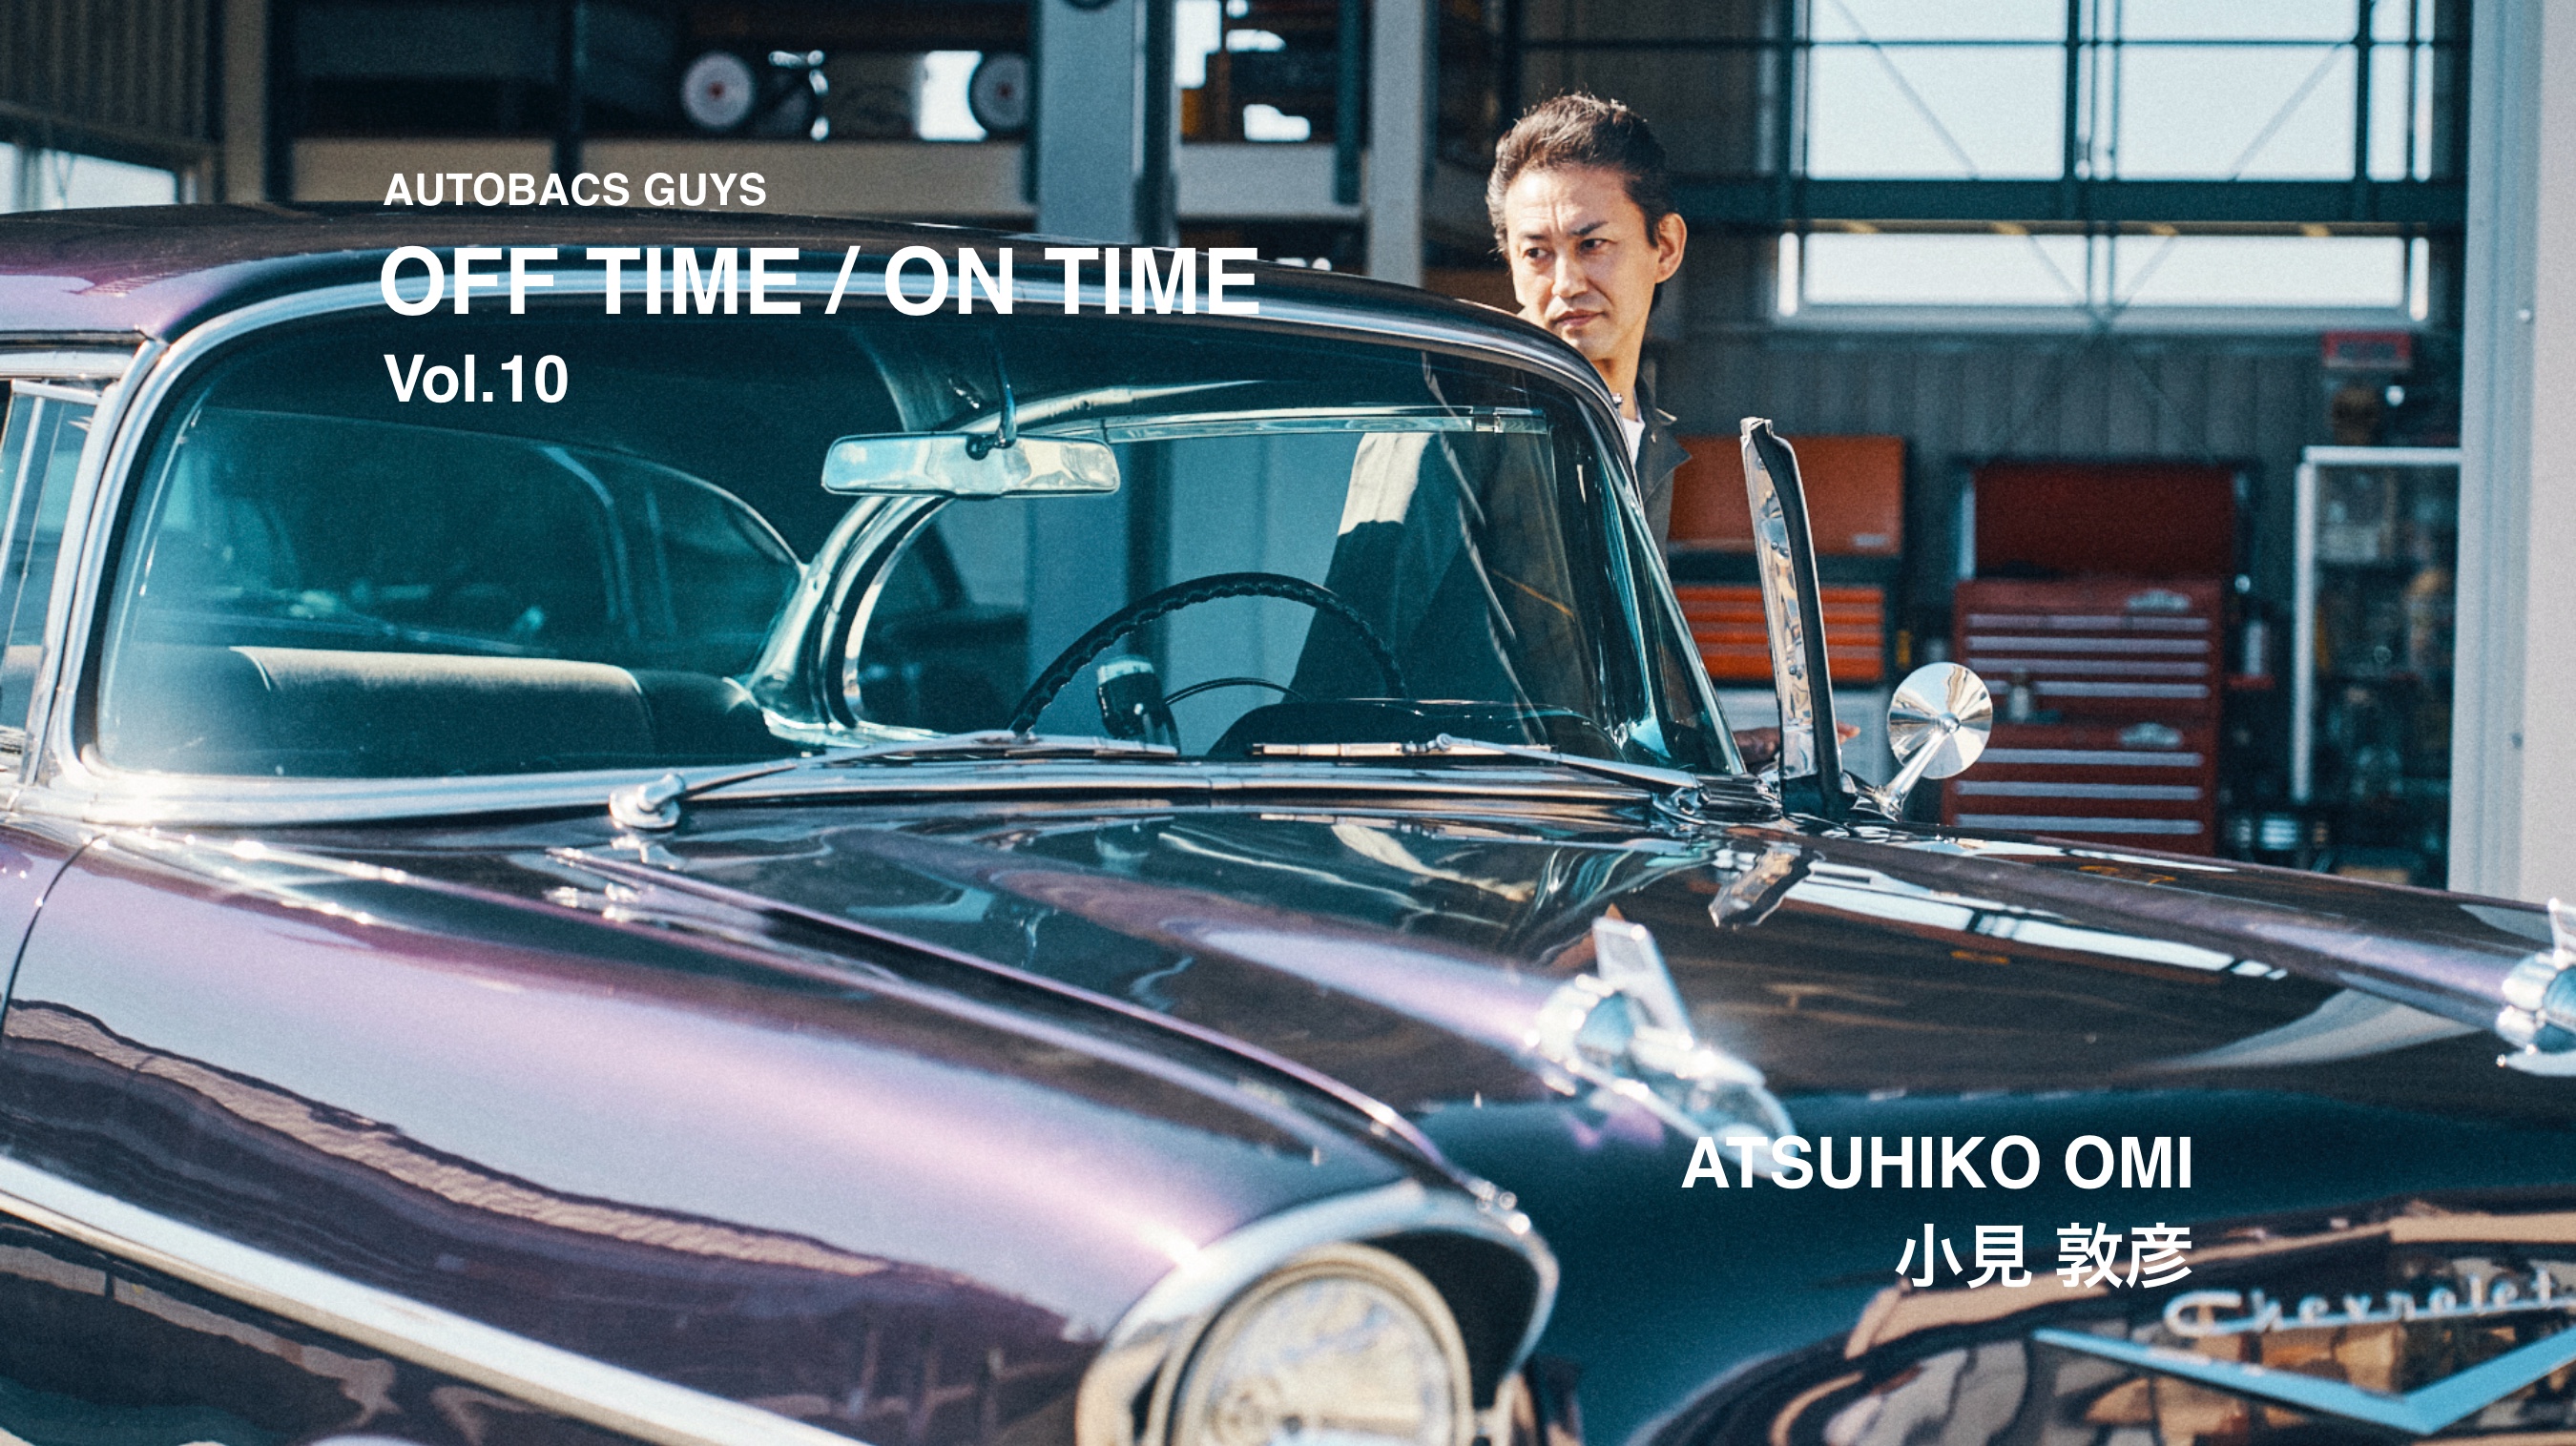 AUTOBACS GUYS OFF TIME / ON TIME オートバックスガイズの裏側　Vol.10 : 小見 敦彦 ATSUHIKO OMI